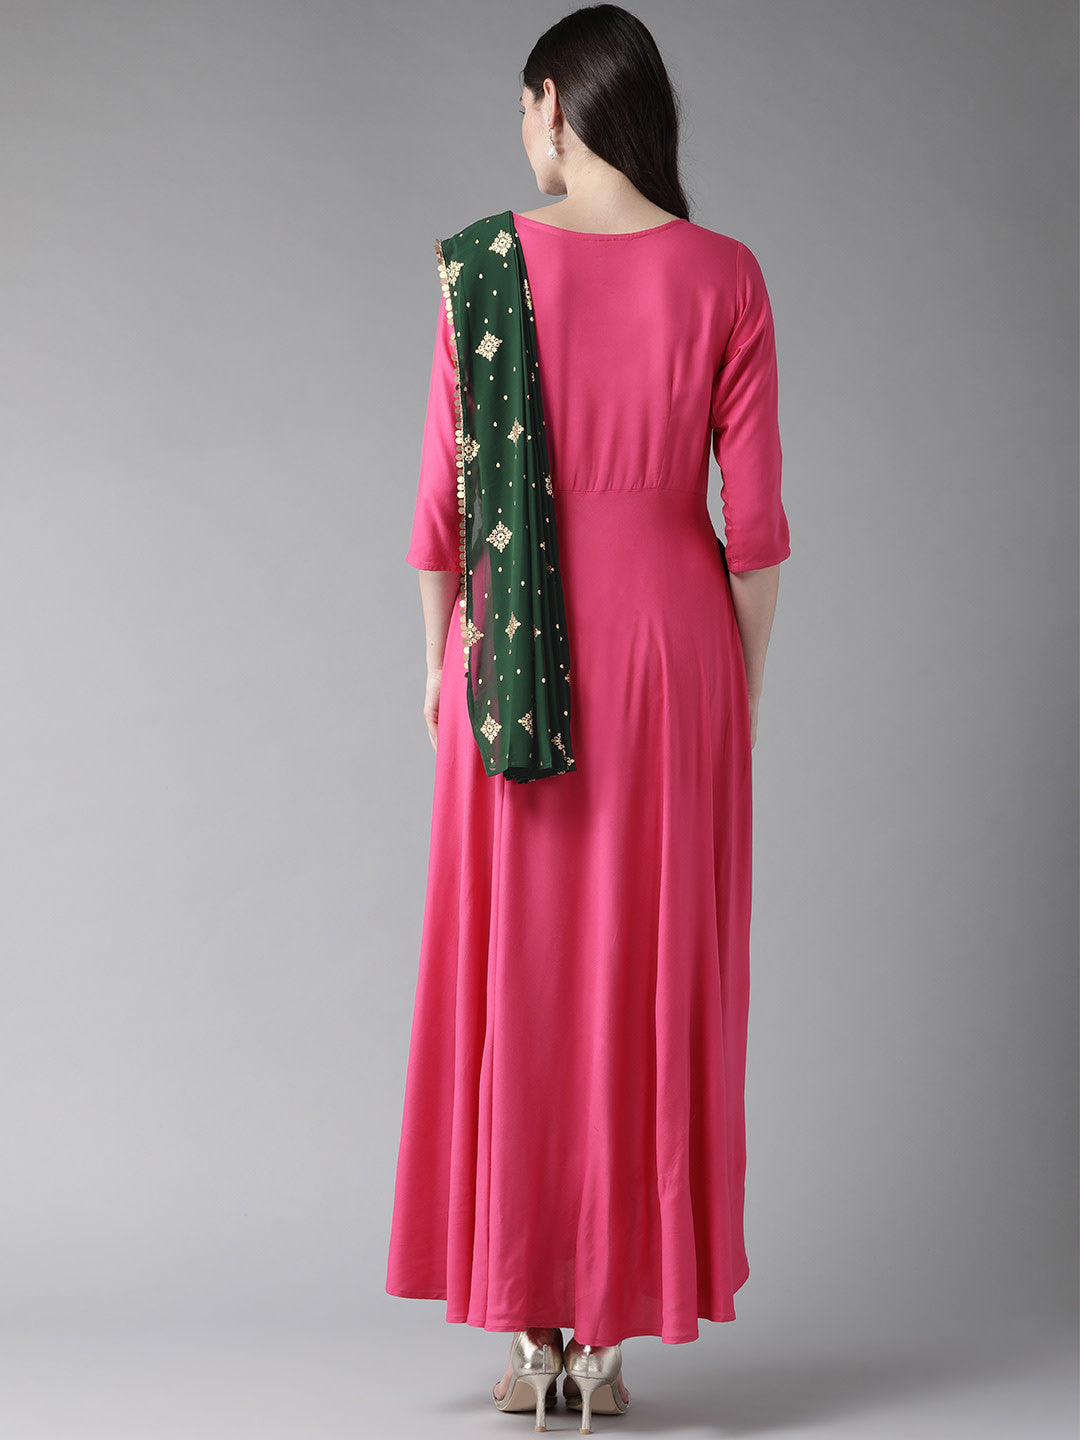 Dark Pink & Green Ethnic Dress